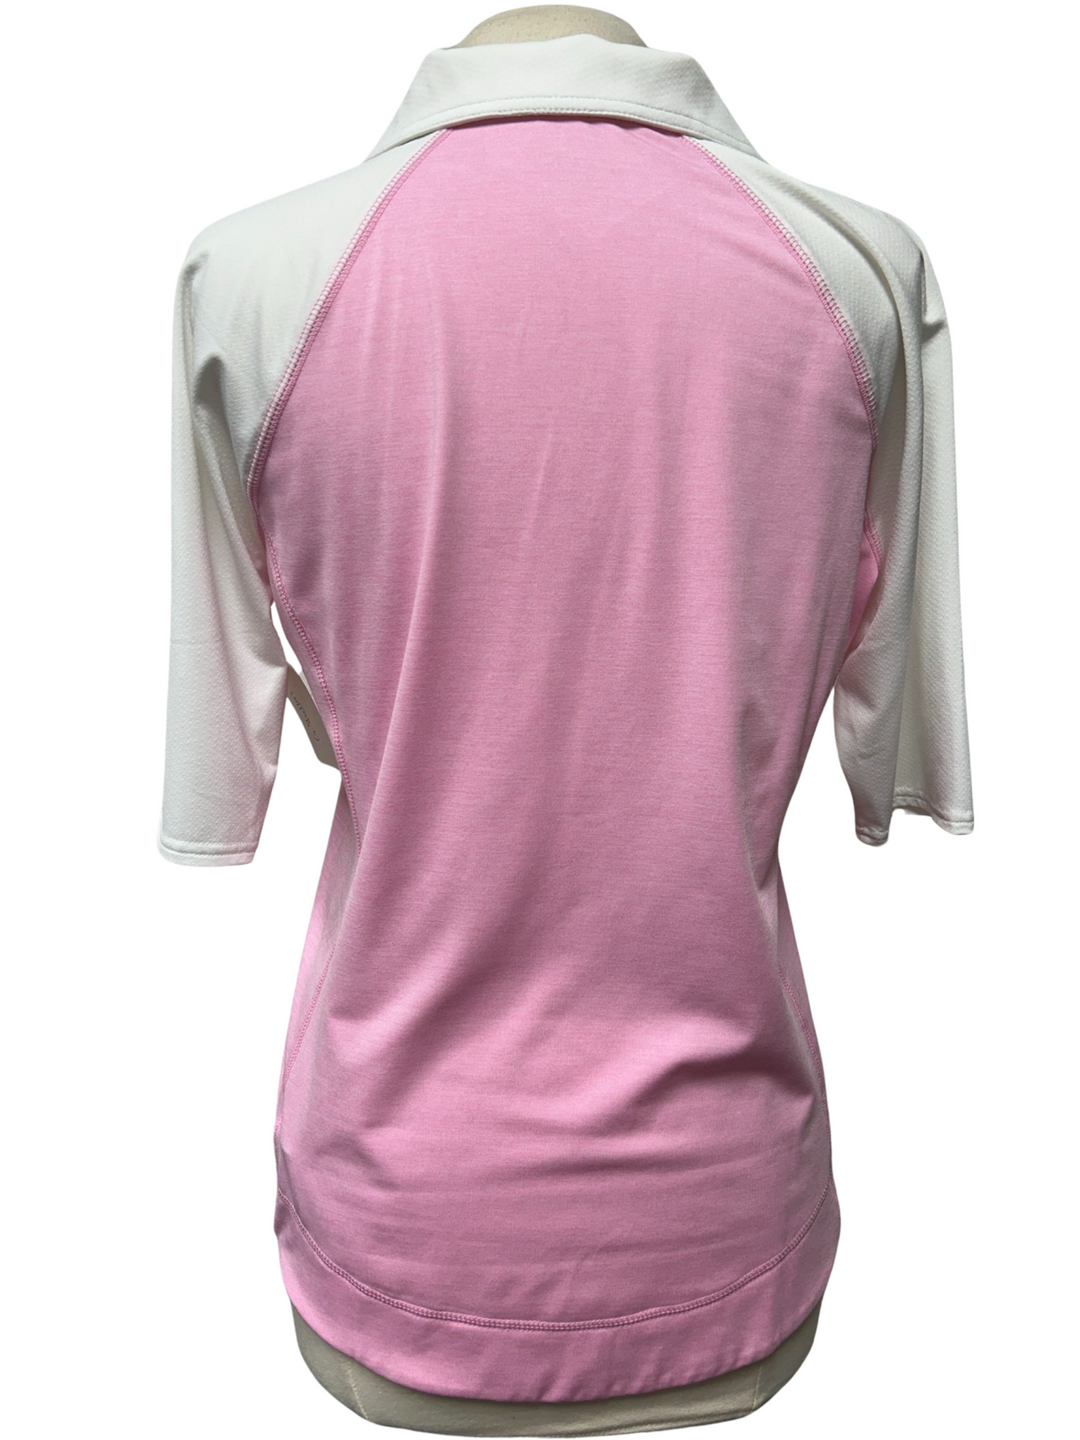 Jofit Heather Pink Short Sleeve Top - Size Large - Skorzie